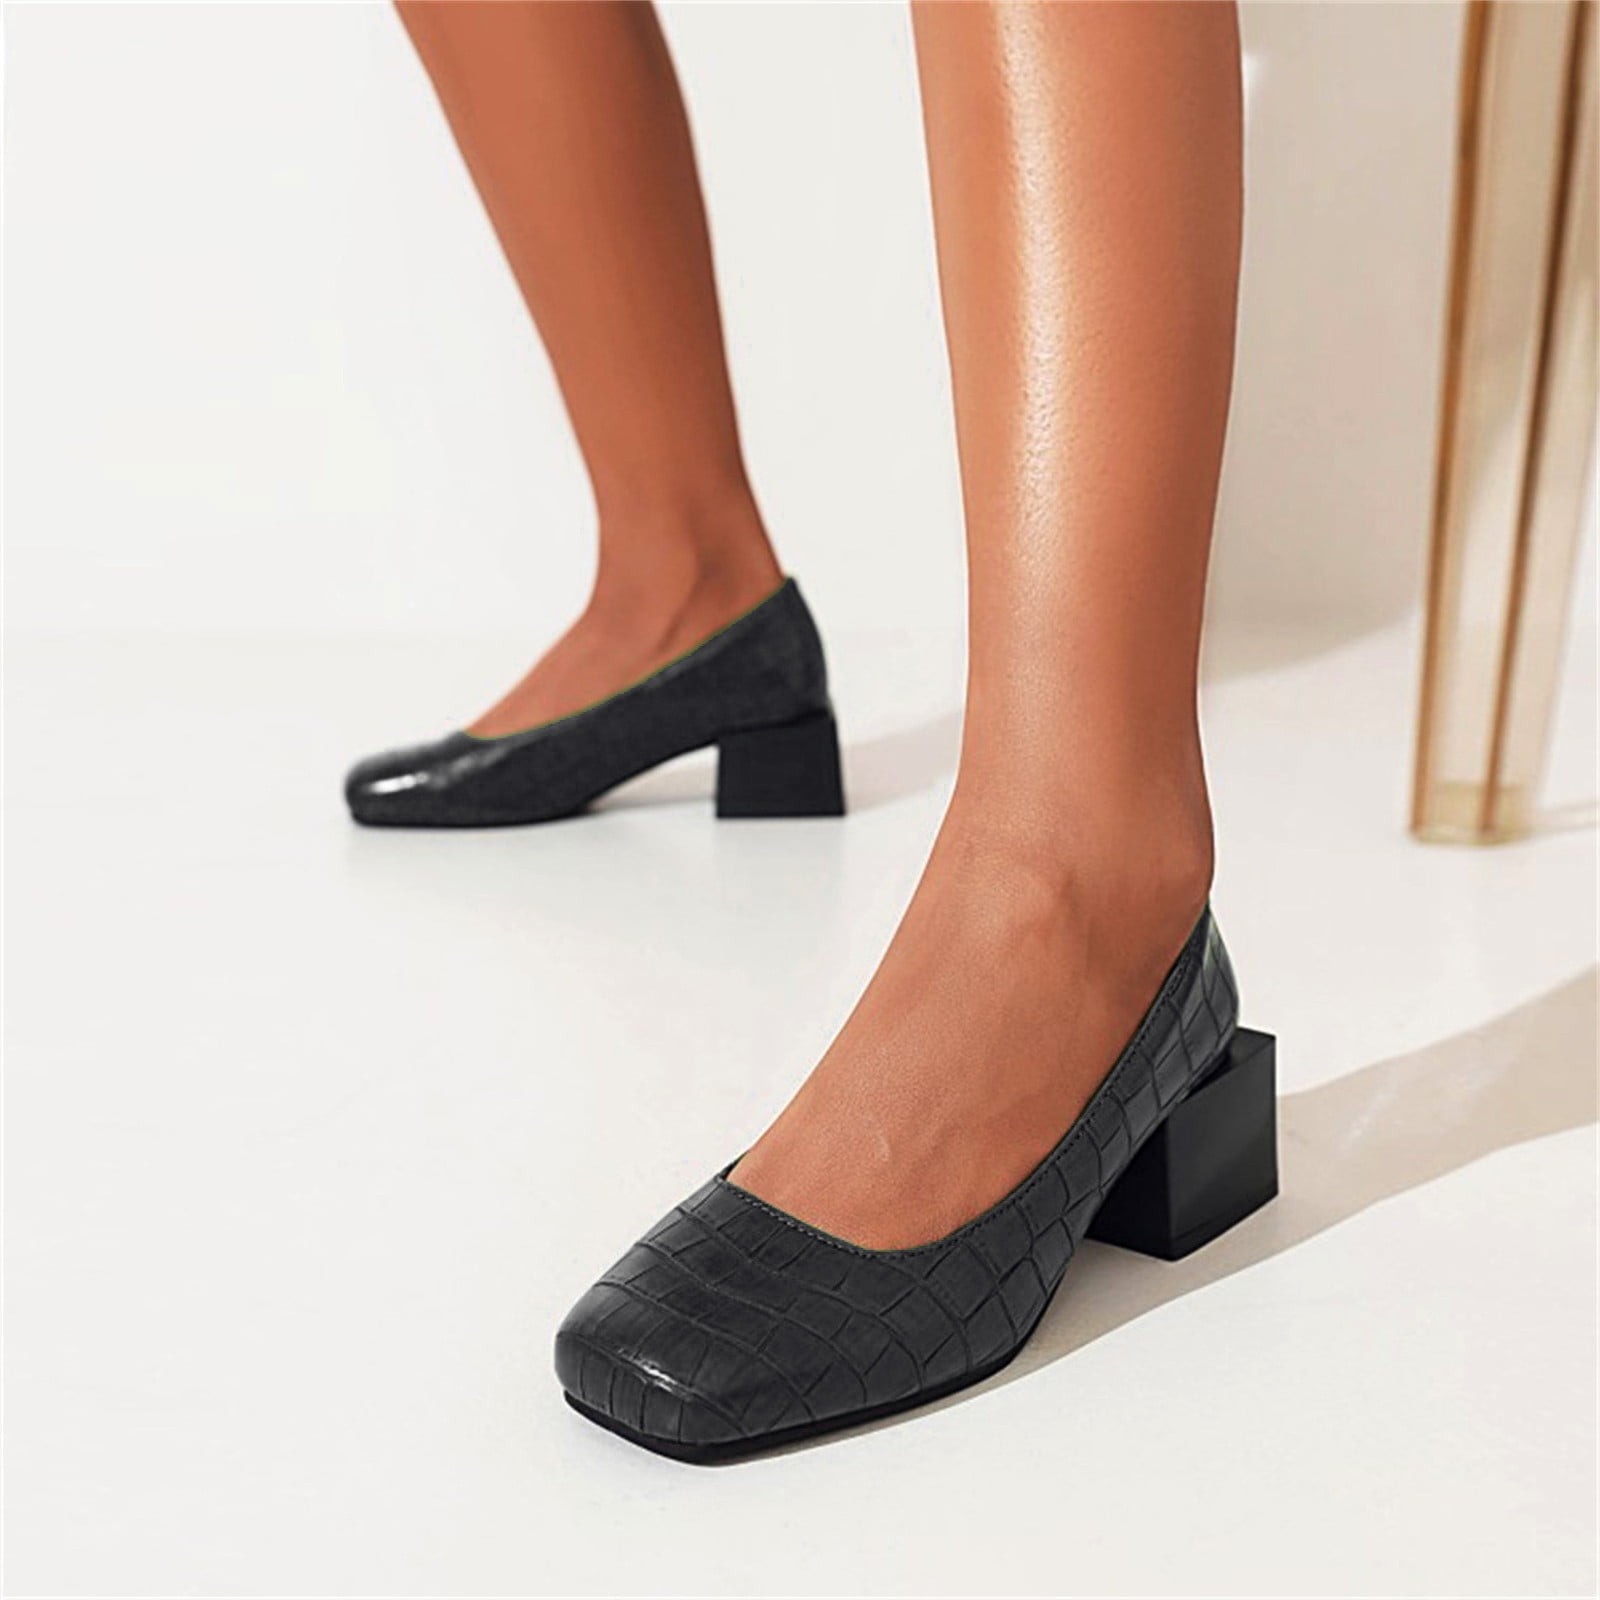 Cathalem Womens Casual Heels Shoes Ladies Fashion Square